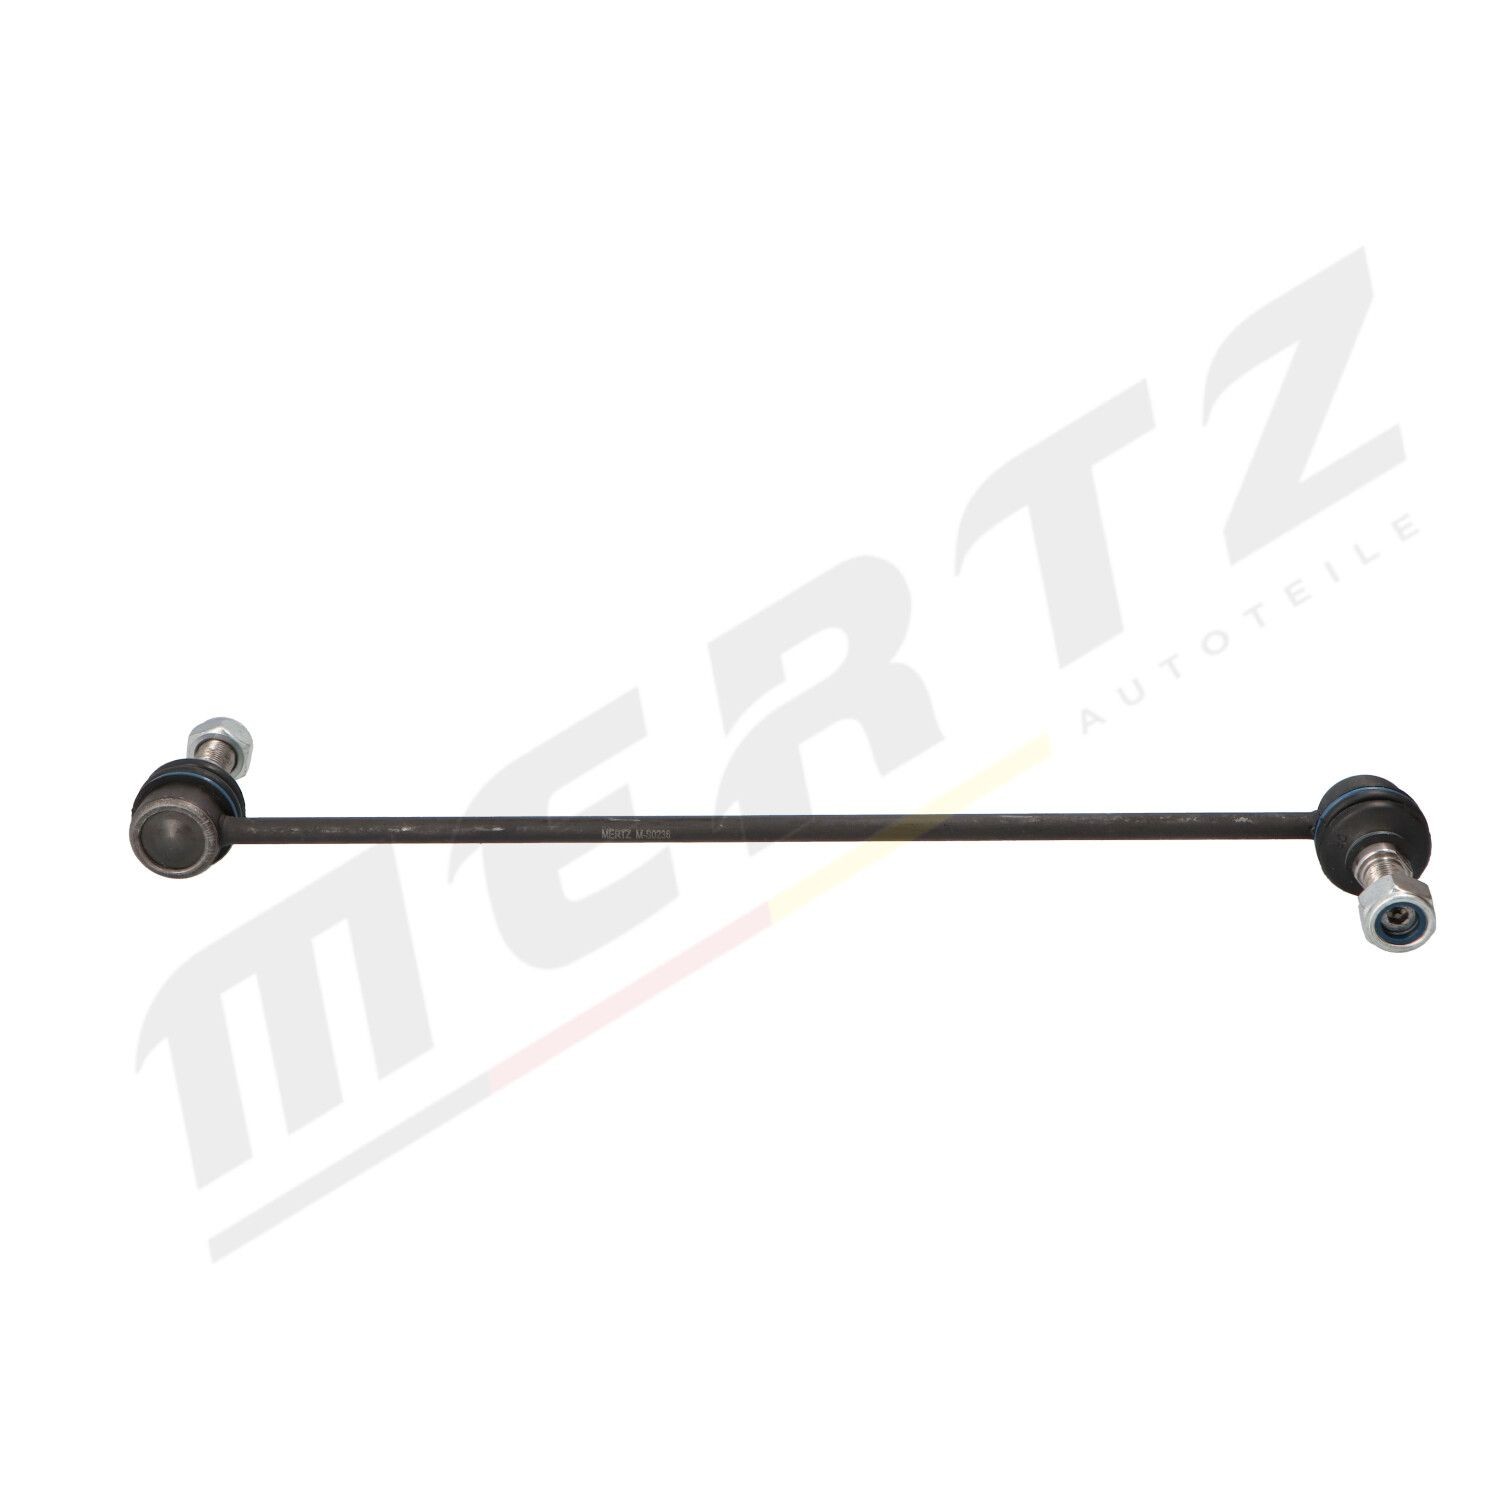 Saab Anti-roll bar link MERTZ M-S0236 at a good price